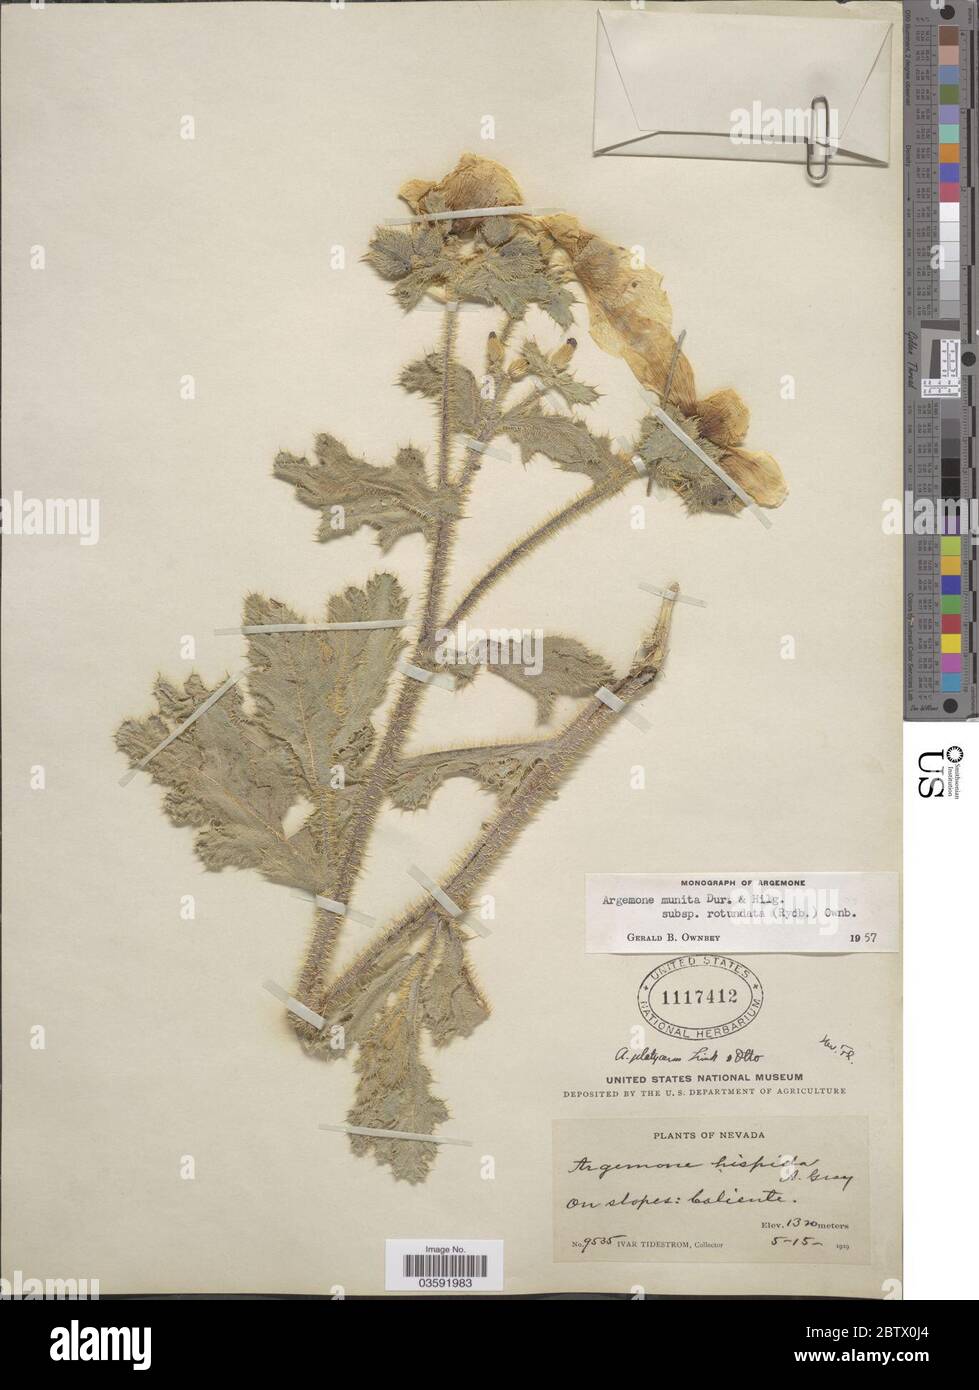 Argemone munita subsp rotundata Rydb GB Ownbey. Stock Photo